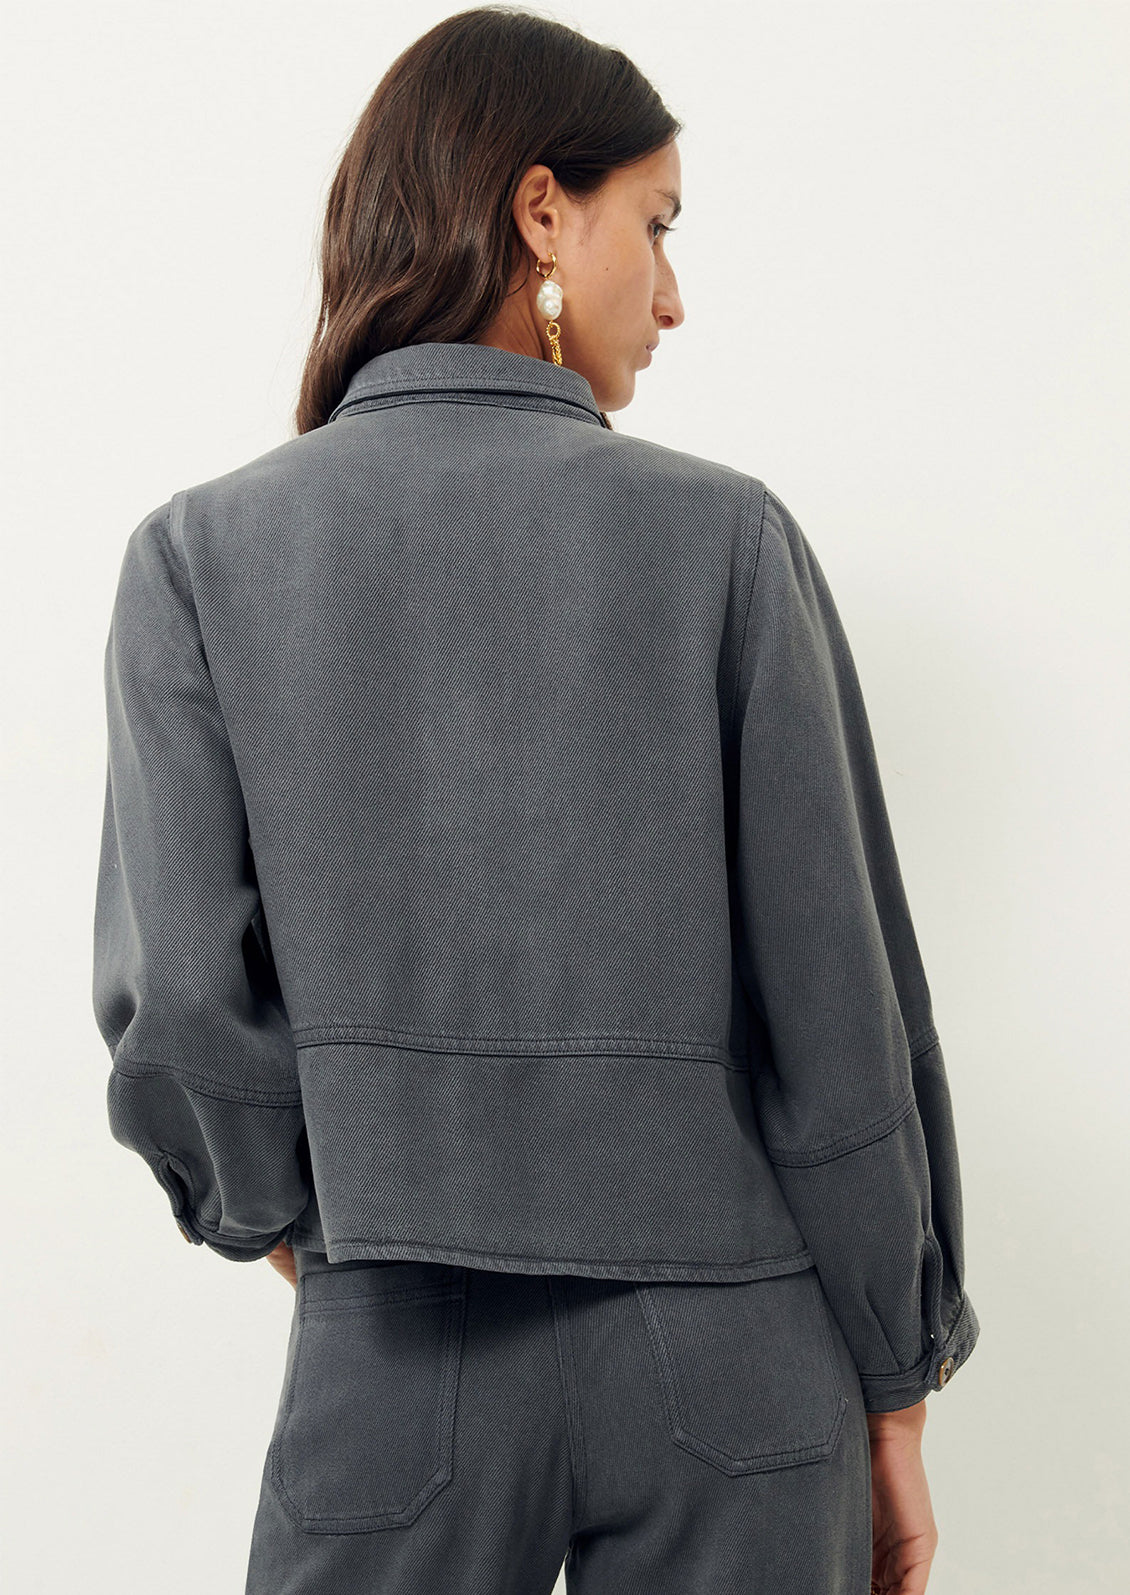 Woman wearing dark gray denim shirt jacket, seen from behind. 